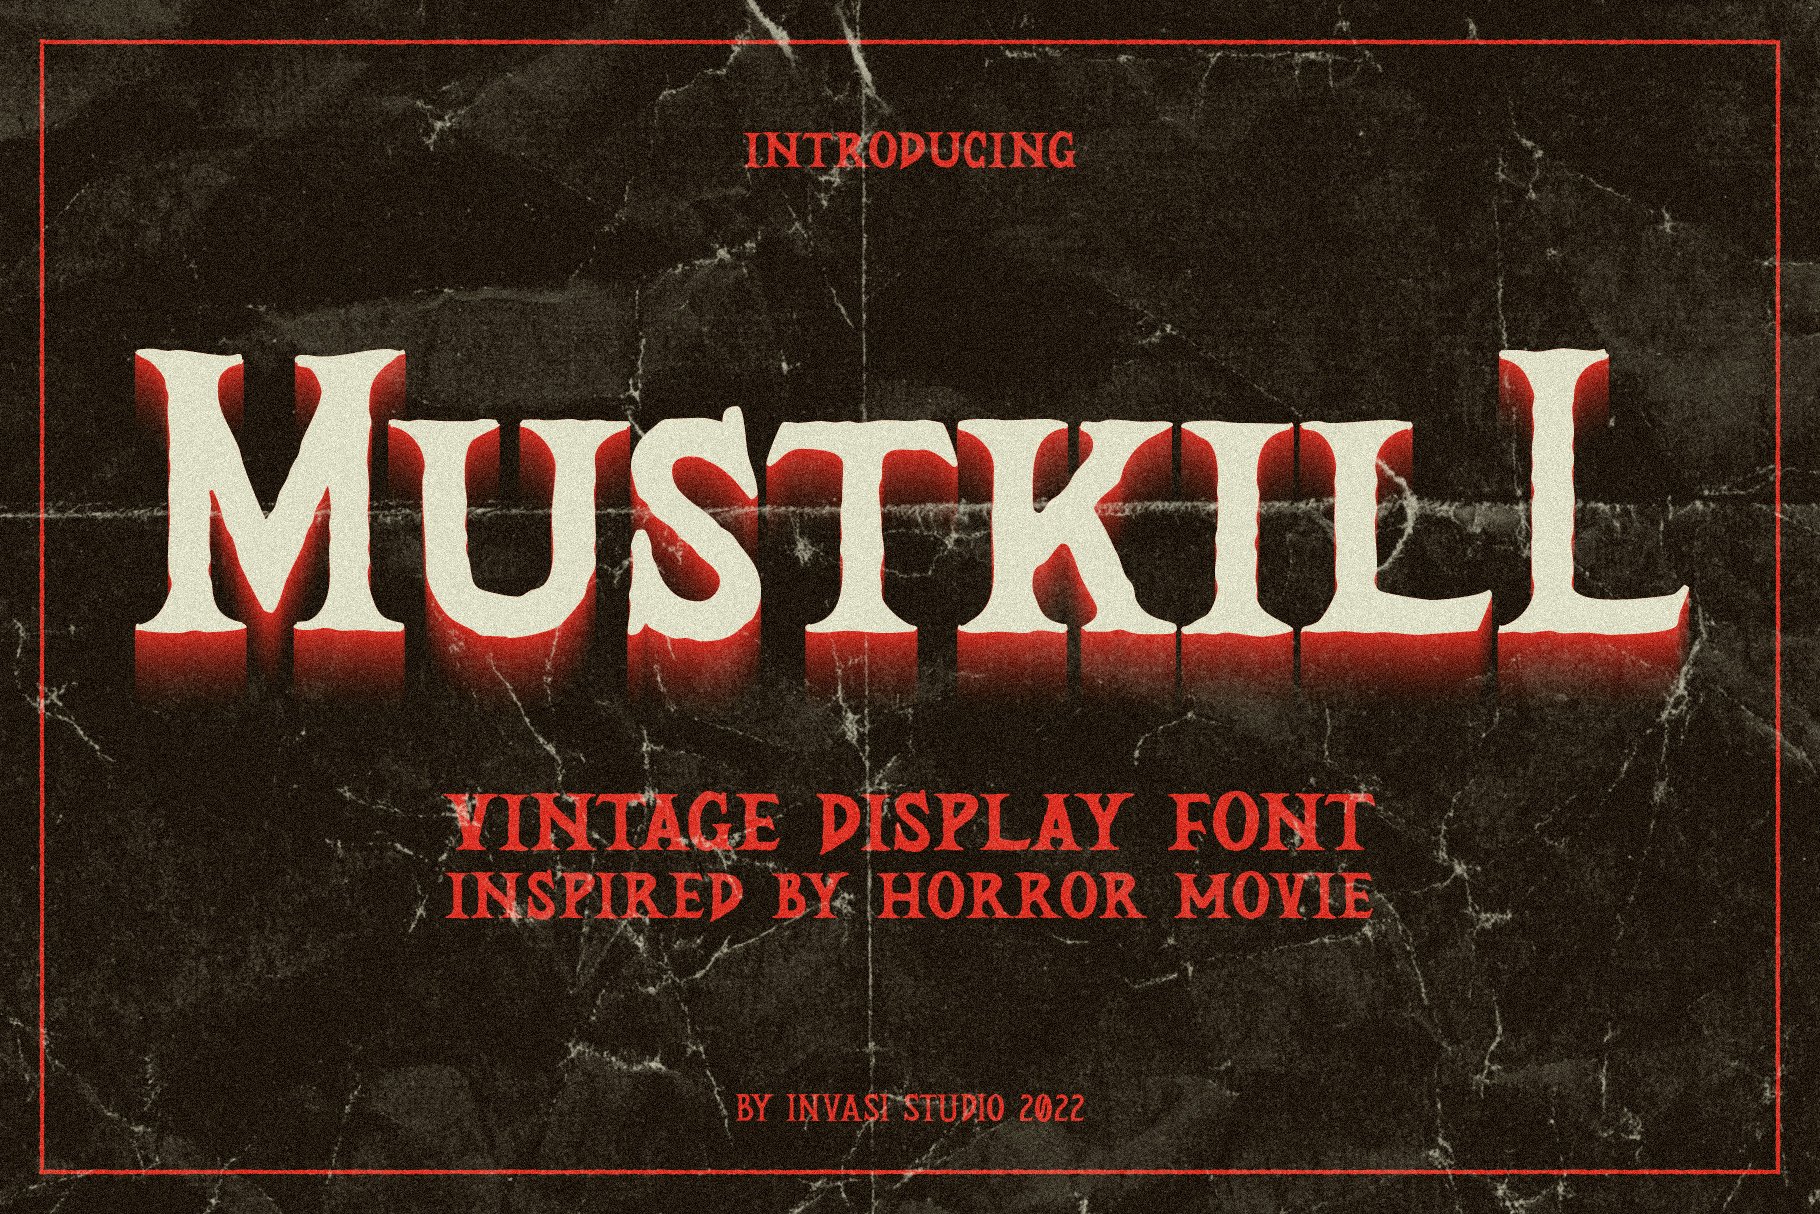 Mustkill - Vintage Horror Font cover image.